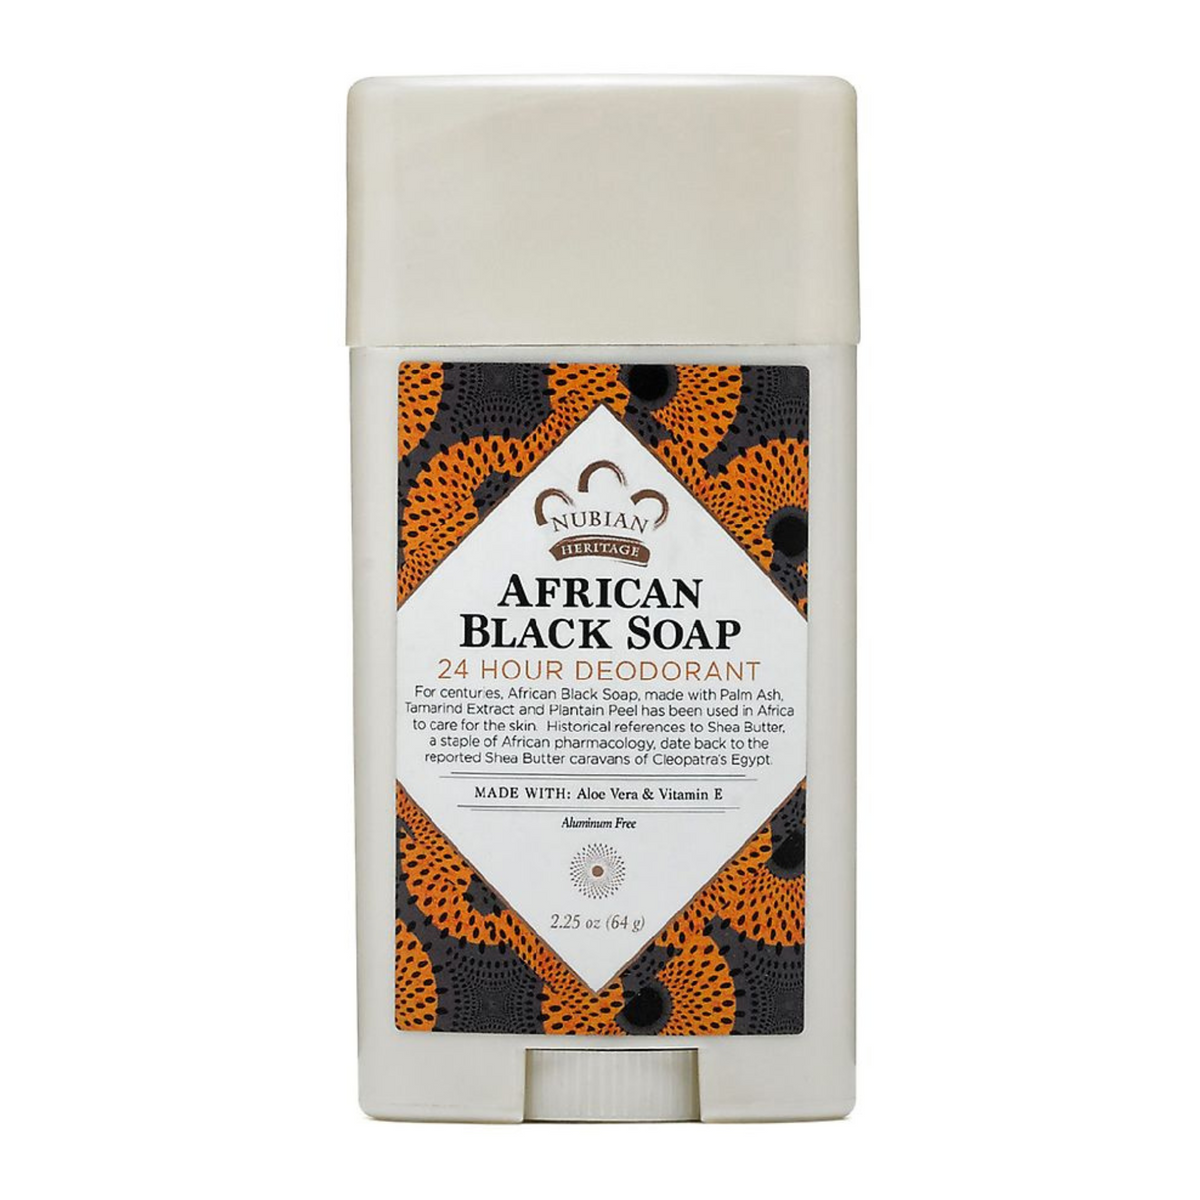 Primary Image of Nubian Heritage African Black Soap 24hr Deodorant Stick (2.25 oz)